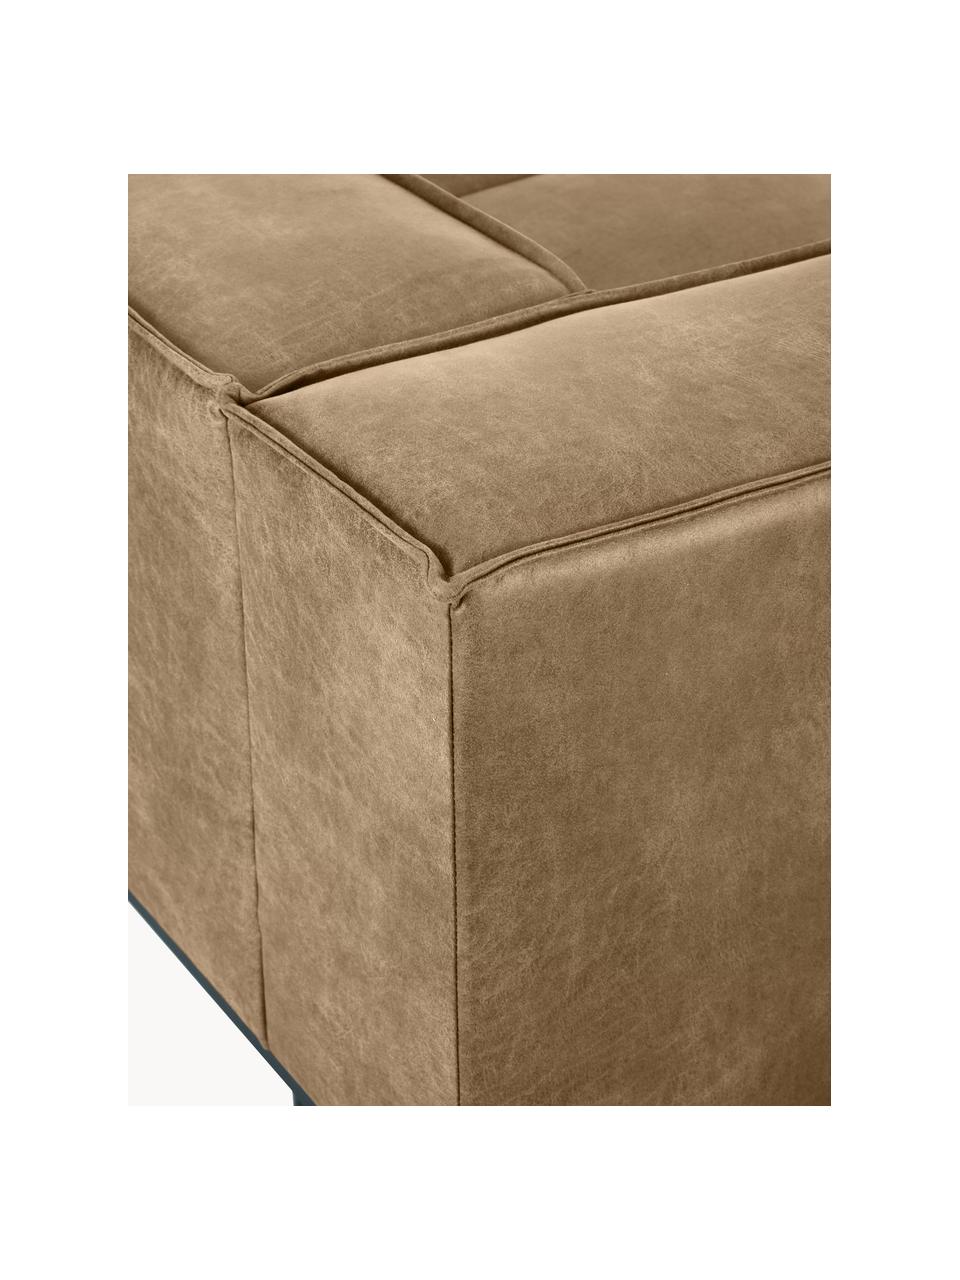 Leder-Sofa Abigail (2-Sitzer) in Braungrau mit Metall-Füßen, Bezug: Lederfaserstoff (70% Lede, Beine: Metall, lackiert, Leder Hellbraun, B 190 x T 95 cm